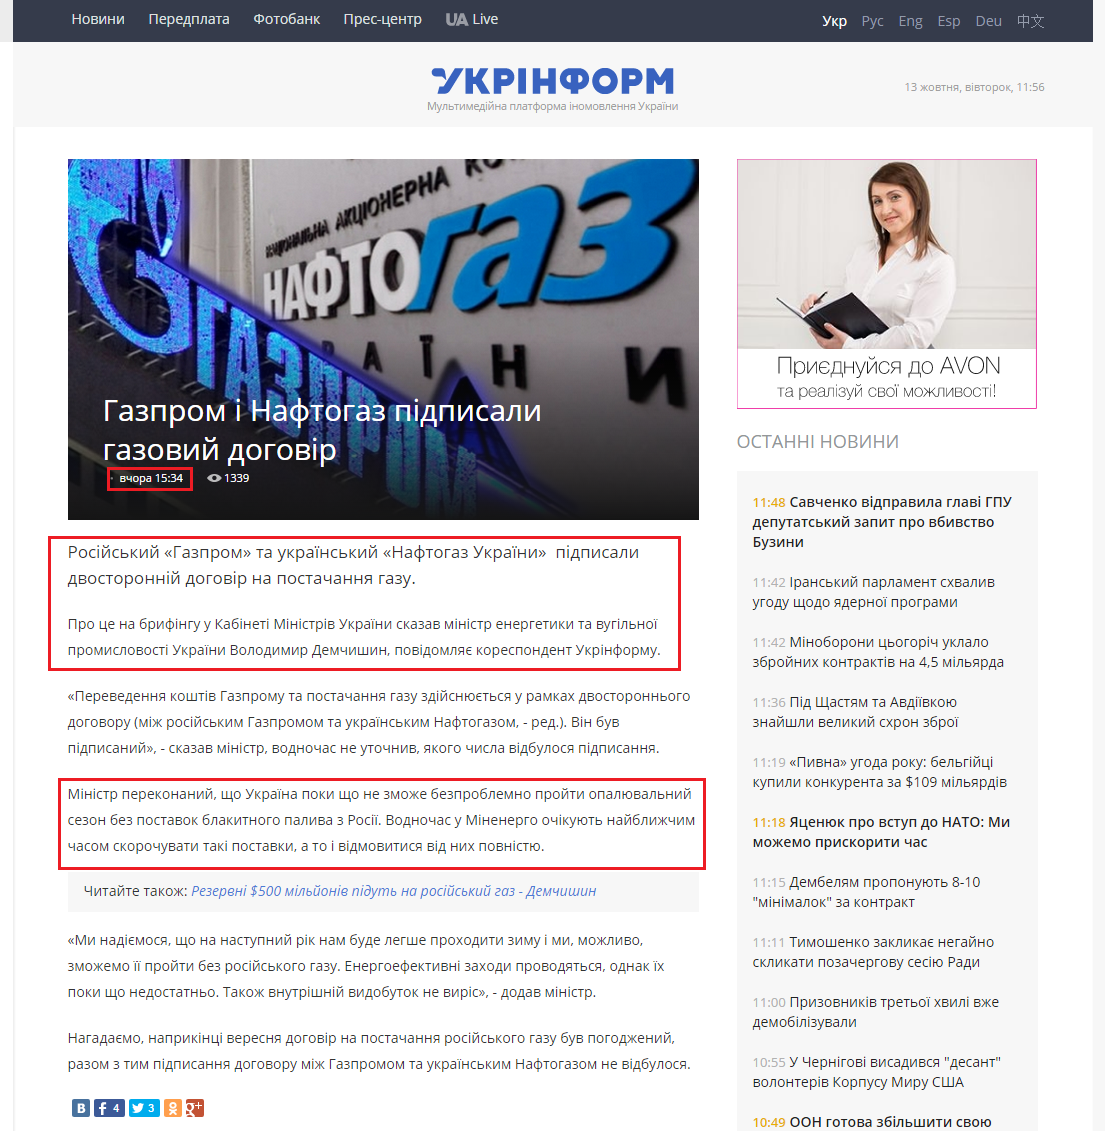 http://www.ukrinform.ua/rubric-politycs/1896853-gazprom-i-naftogaz-pidpisali-gazoviy-dogovir.html